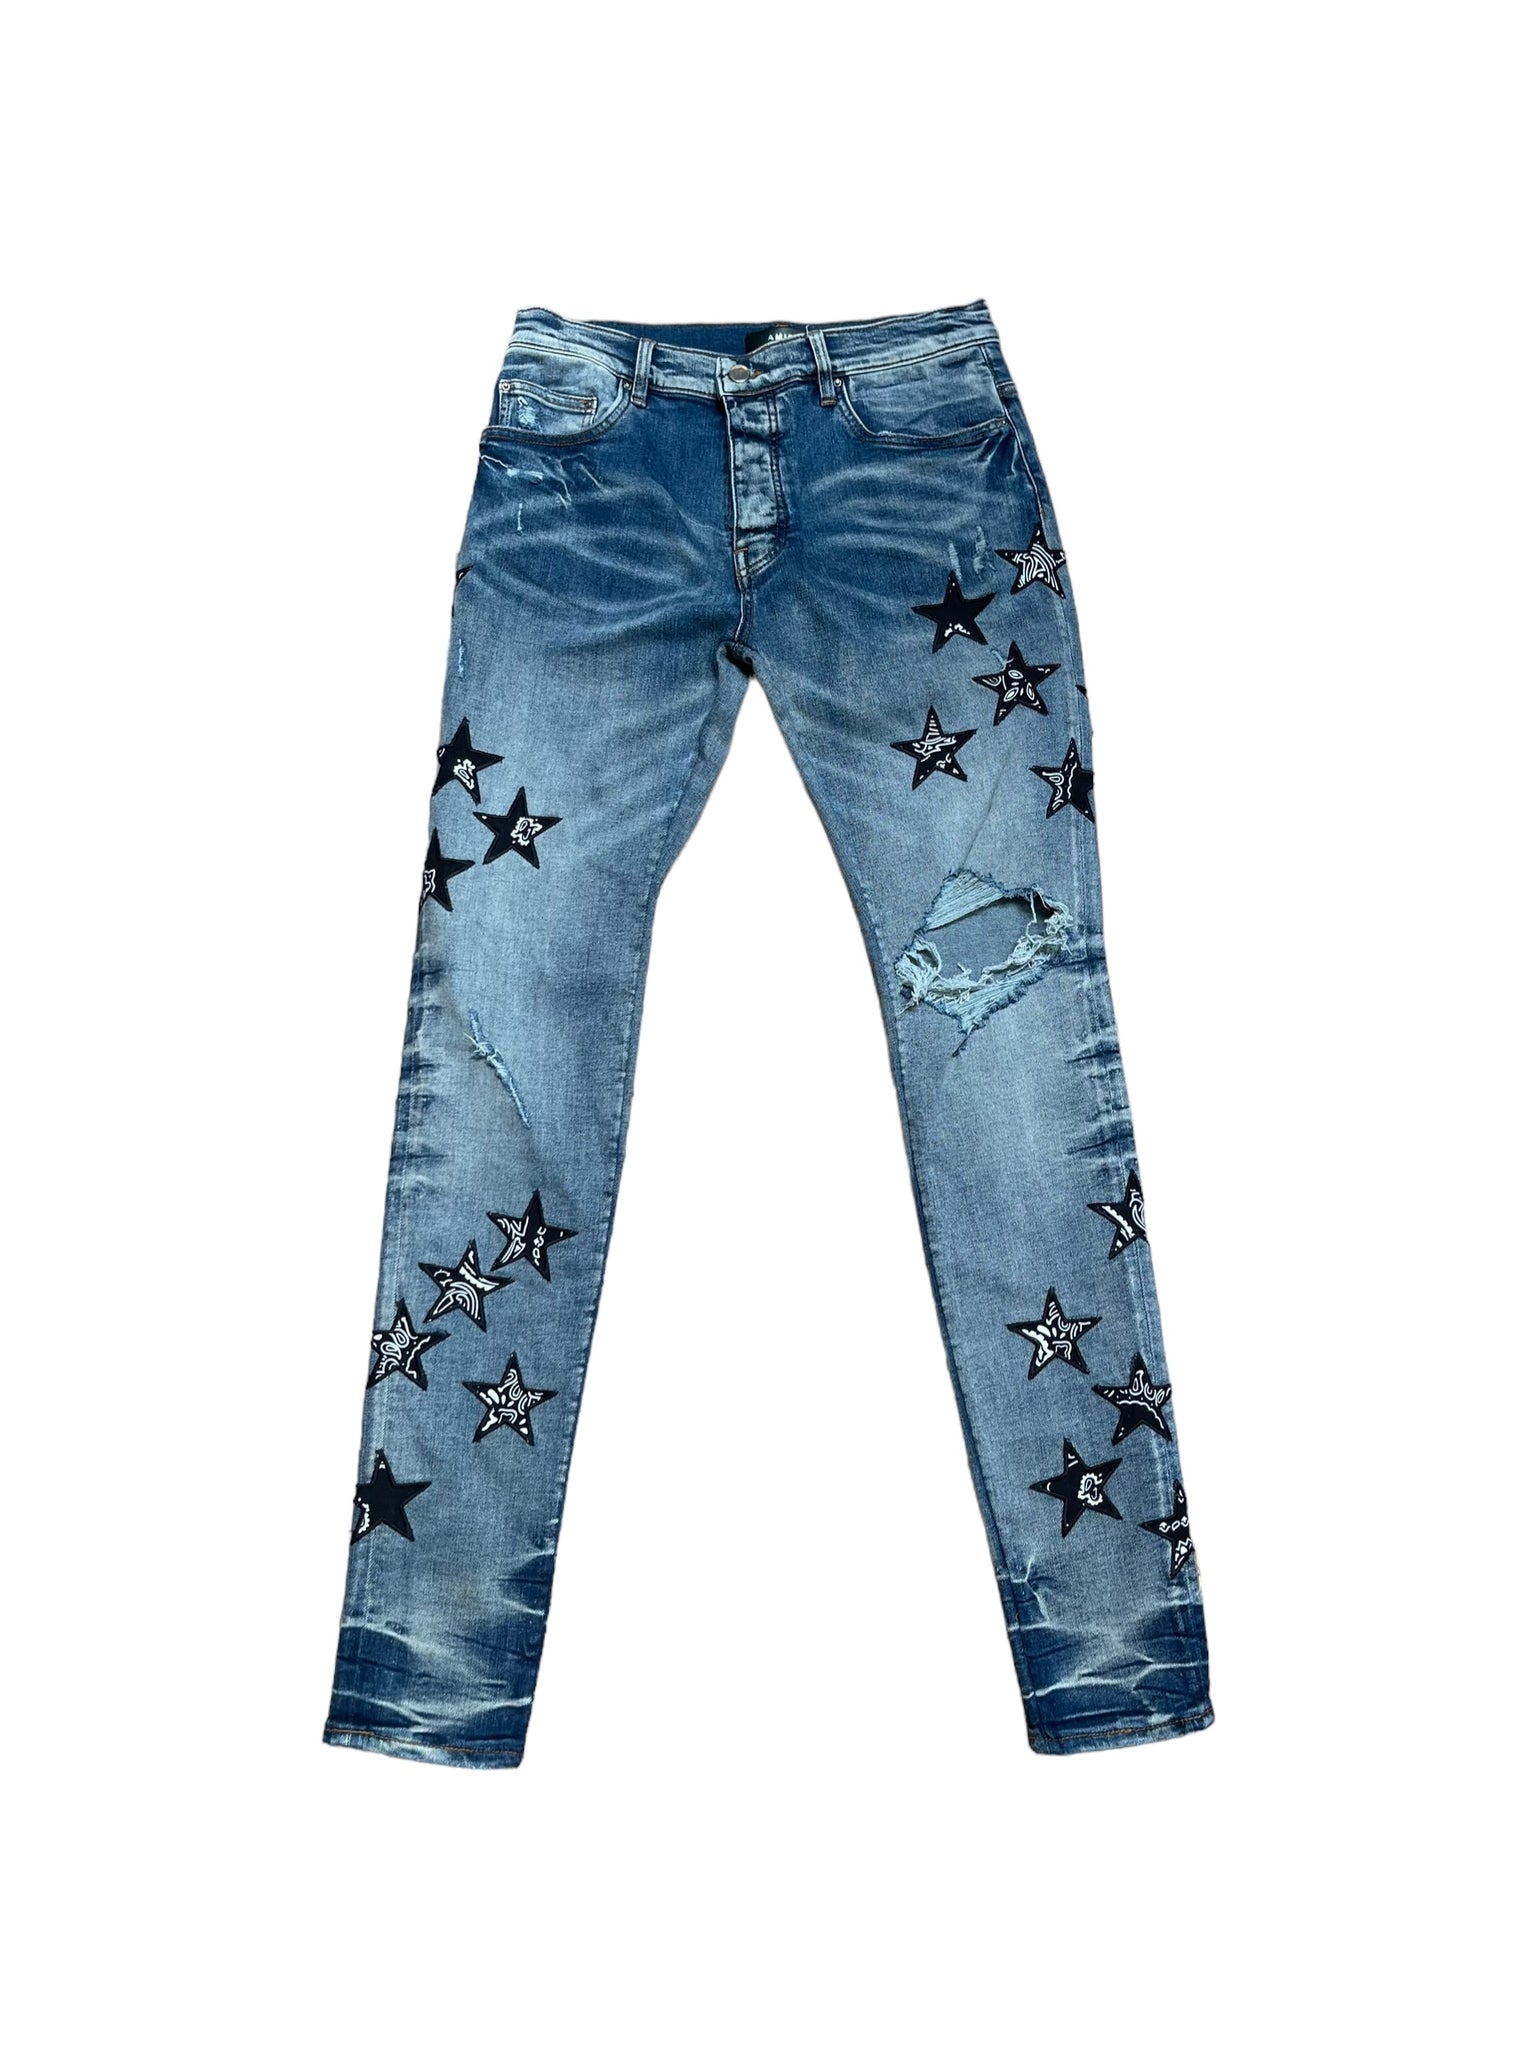 Amiri Black Star Patch Jeans "Dark Wash" (Pre-Owned)